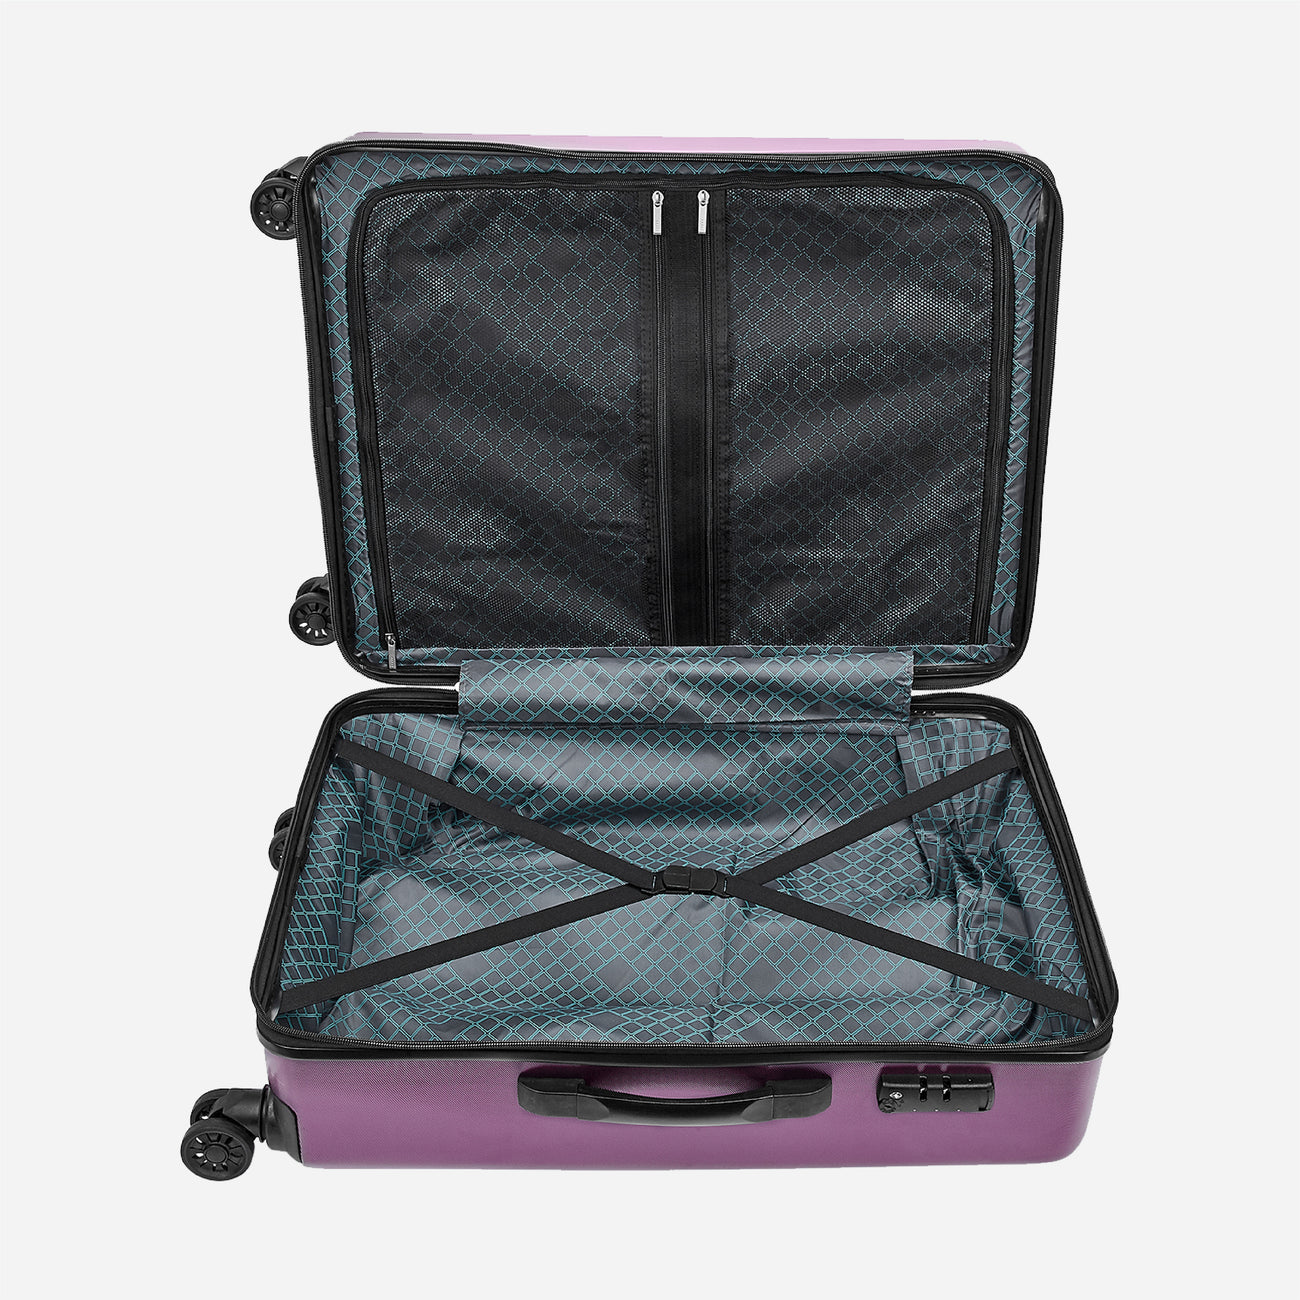 Cargo Neo Hard Luggage - Magenta Purple